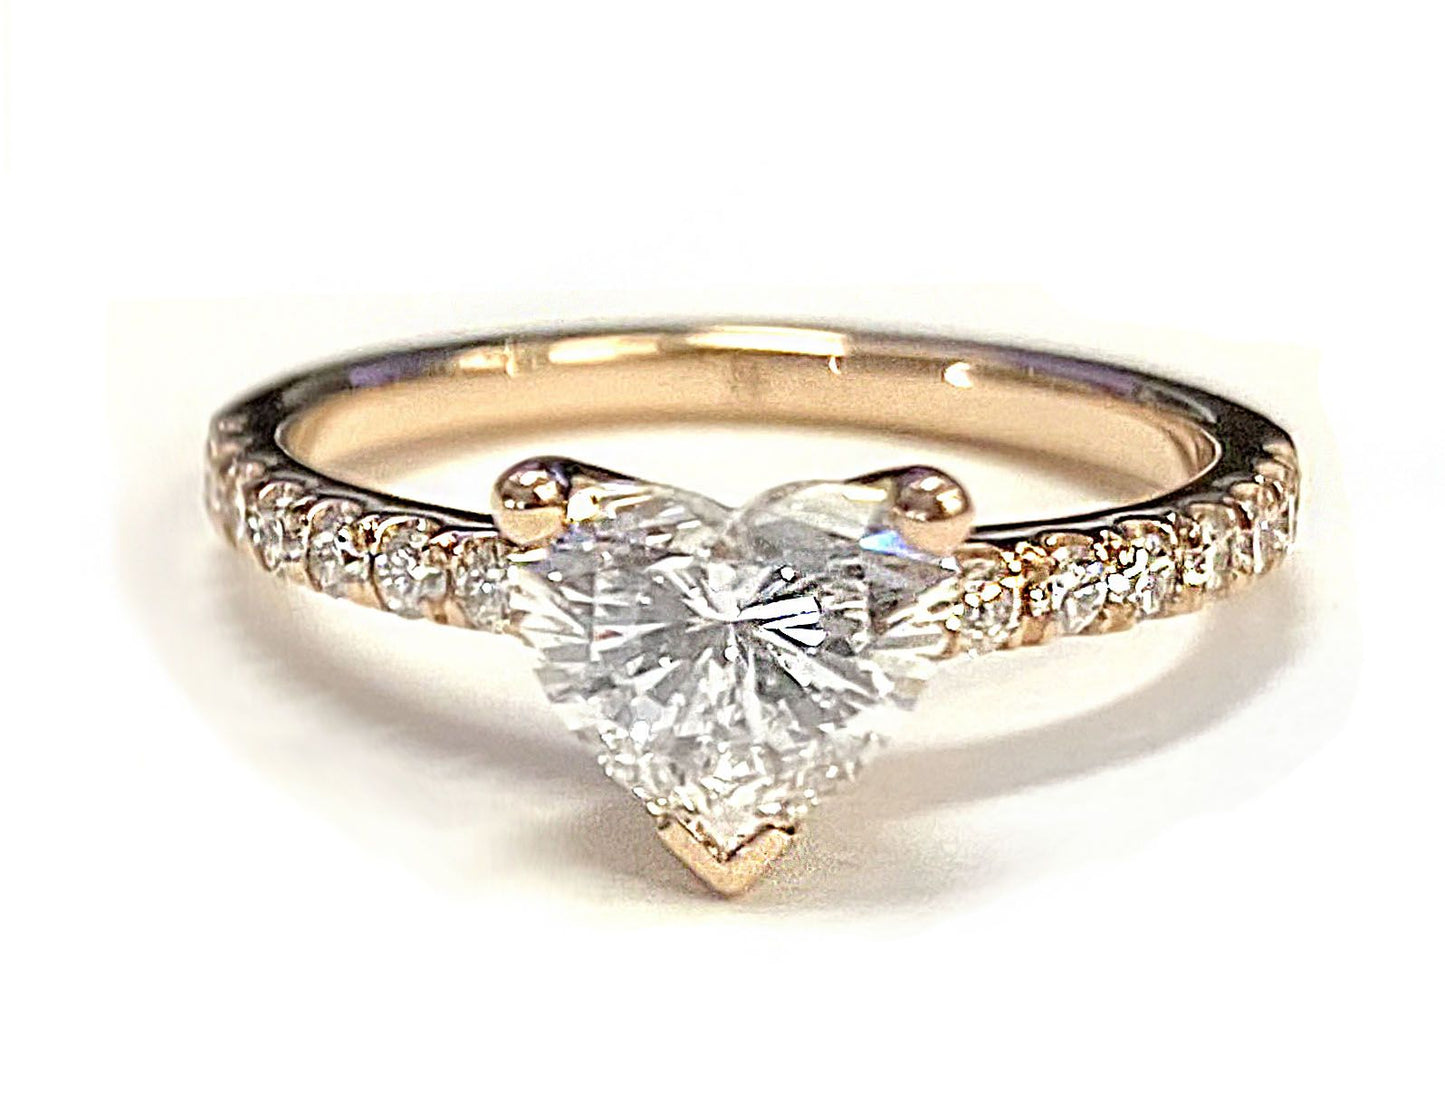 18K White Gold Heart Shape Center Simple Linear Diamond Pave Engagement Ring -1/5ctw